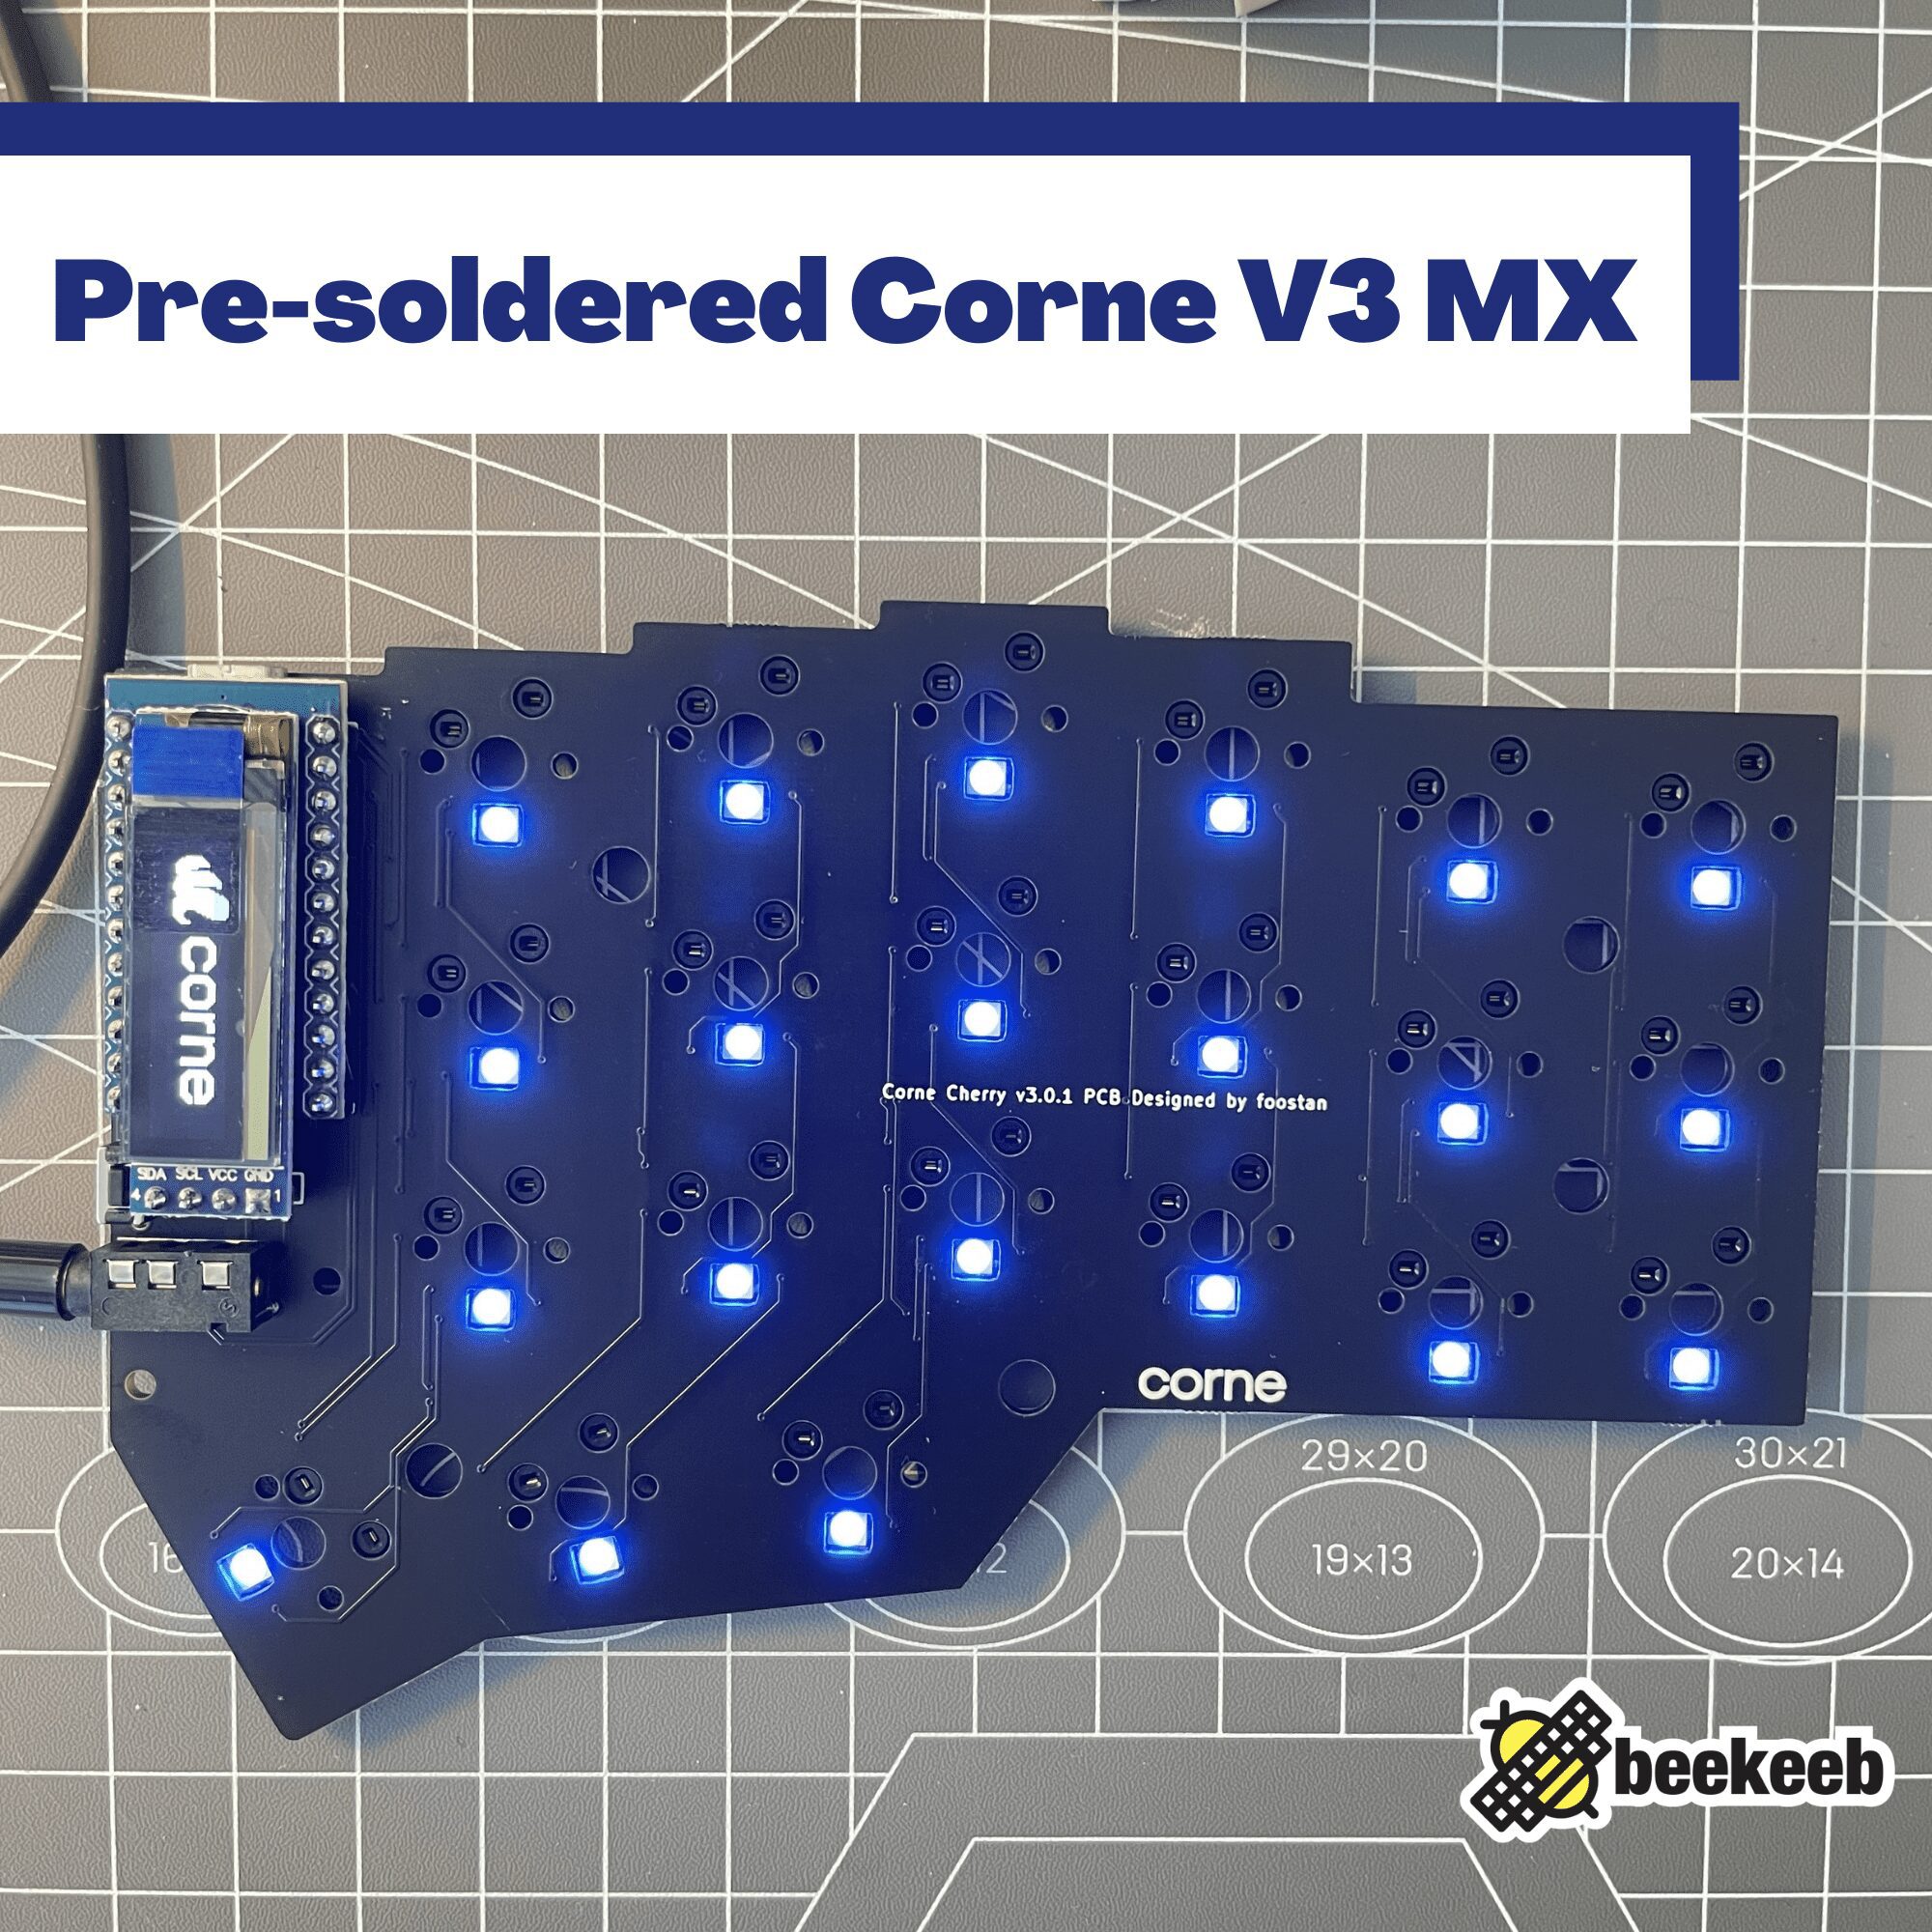 Pre-soldered Crkbd v3 MX (Corne Keyboard)